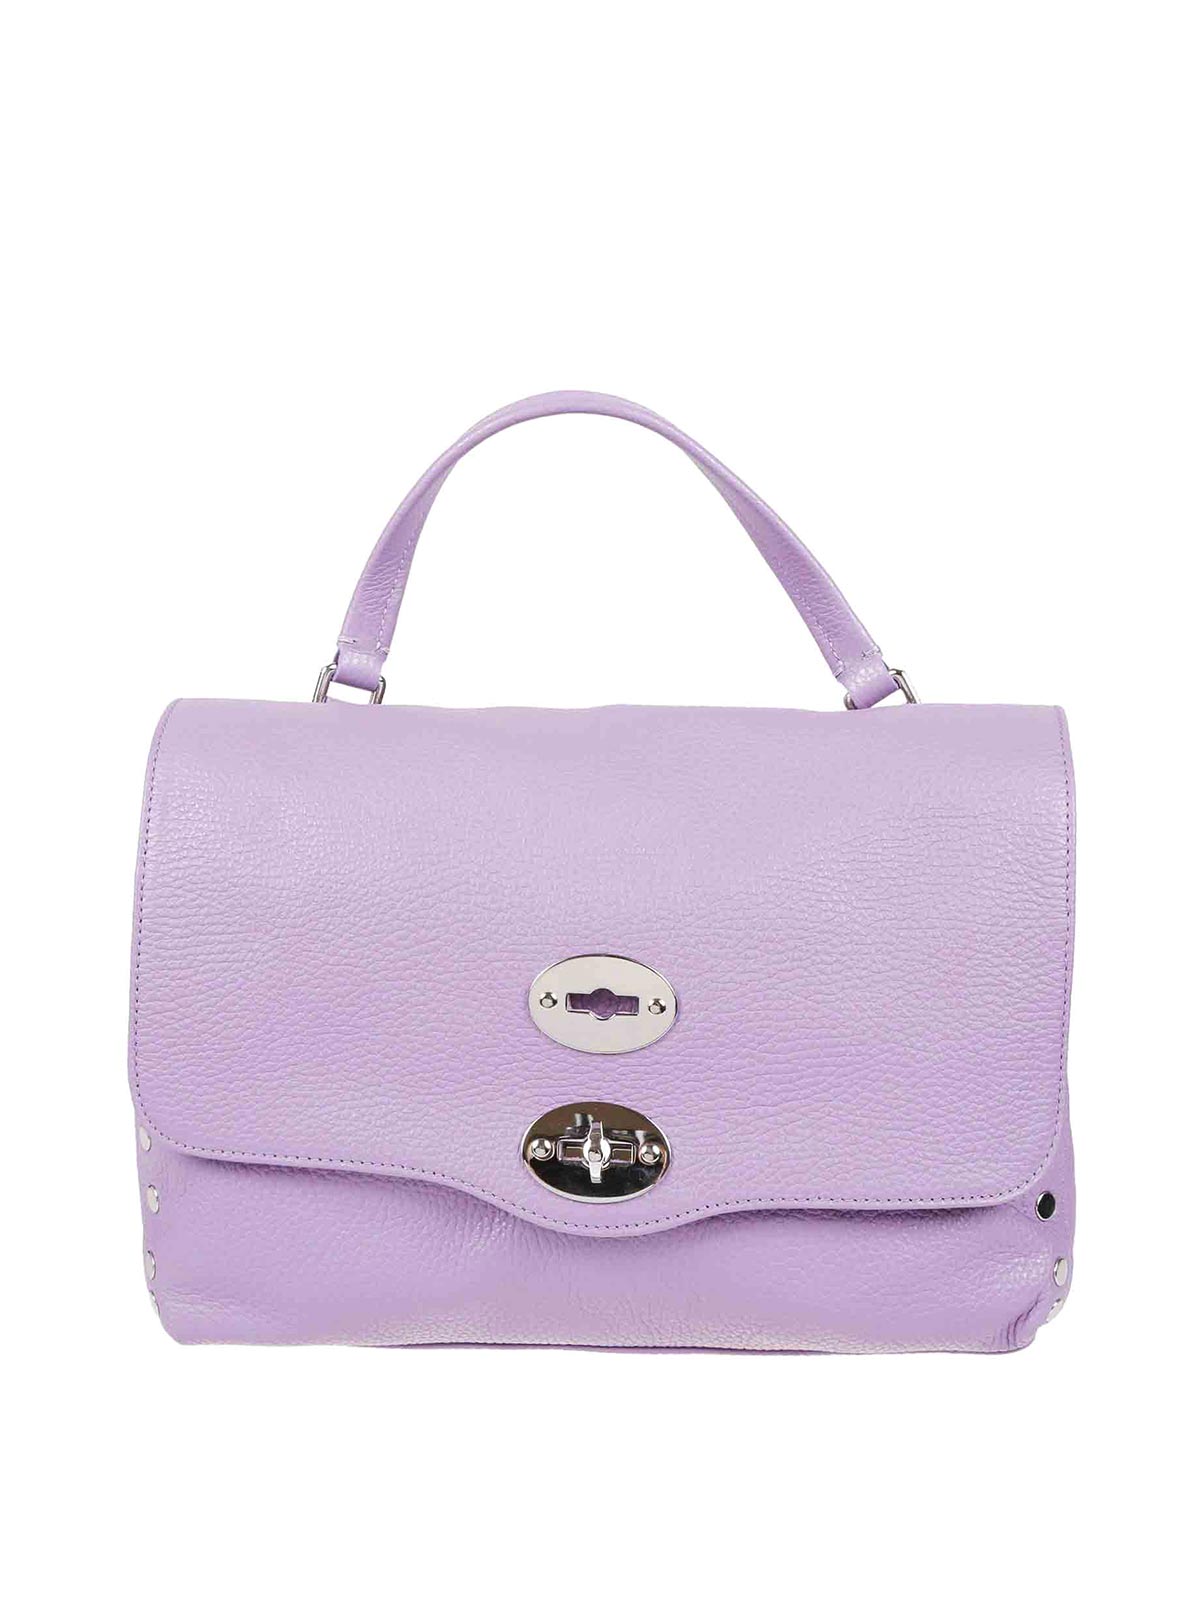 Zanellato Violet Leather Bag In Brown